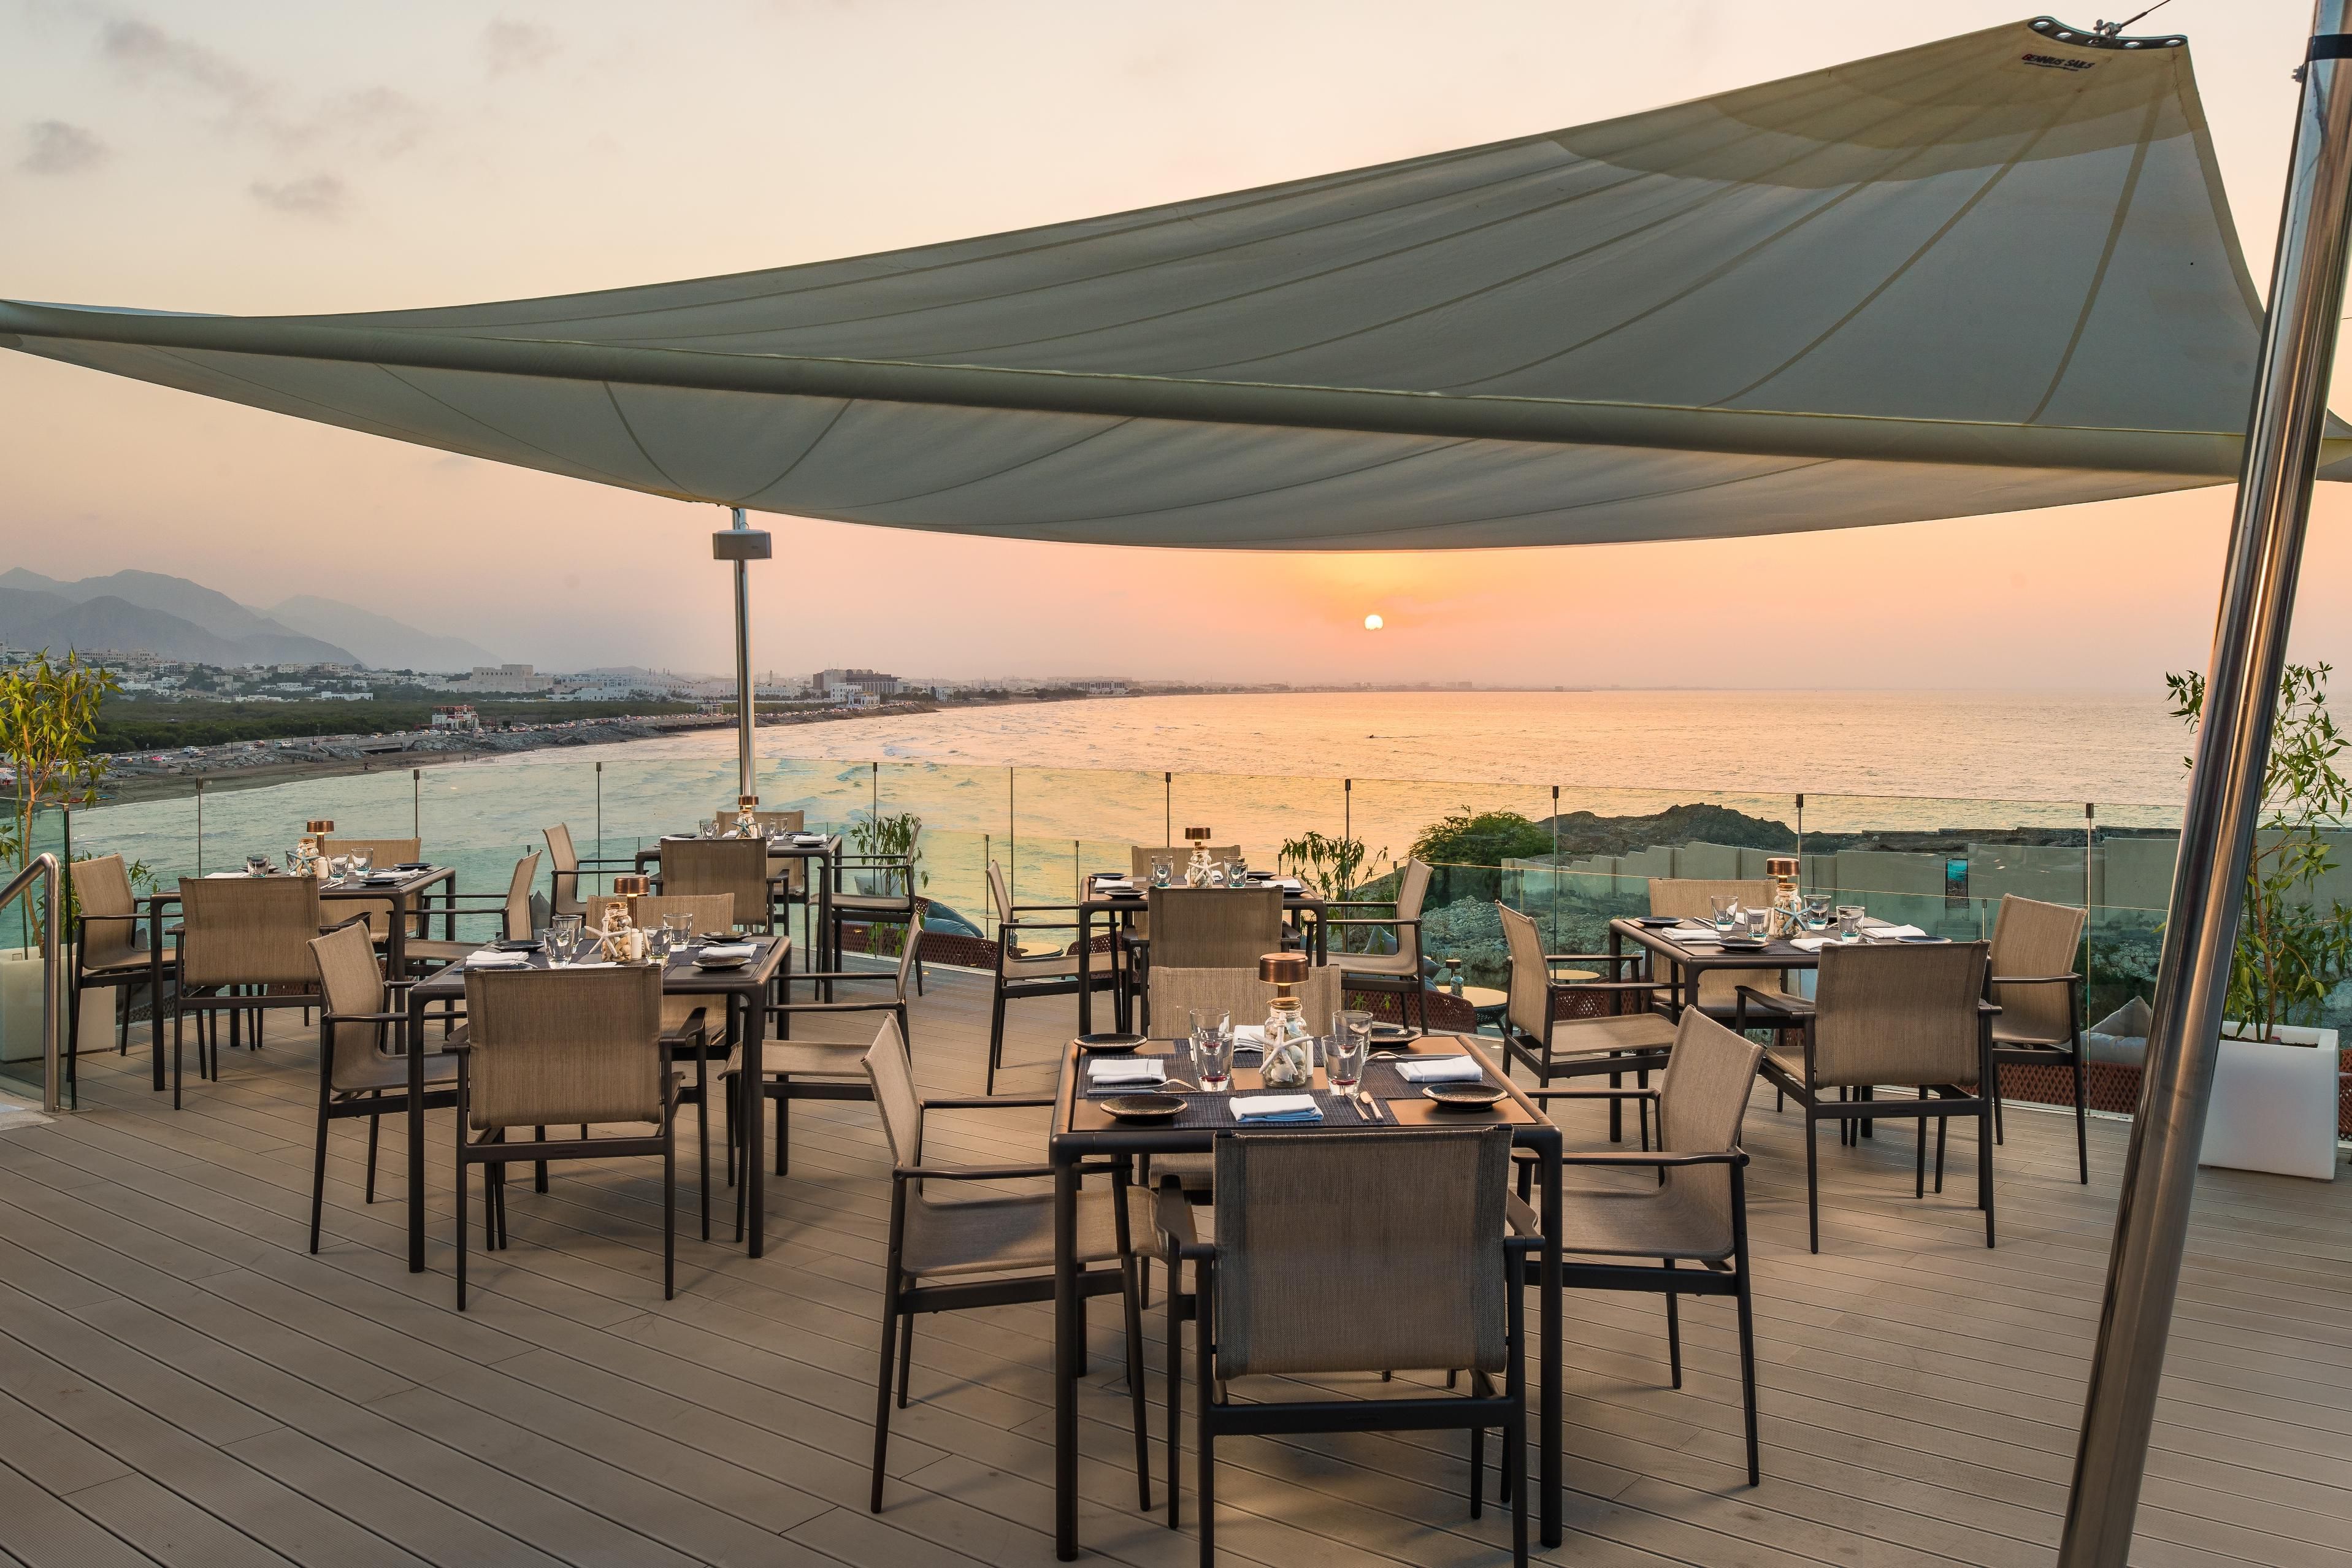 The Edge Restaurant Terrace with striking panoramic sunset views